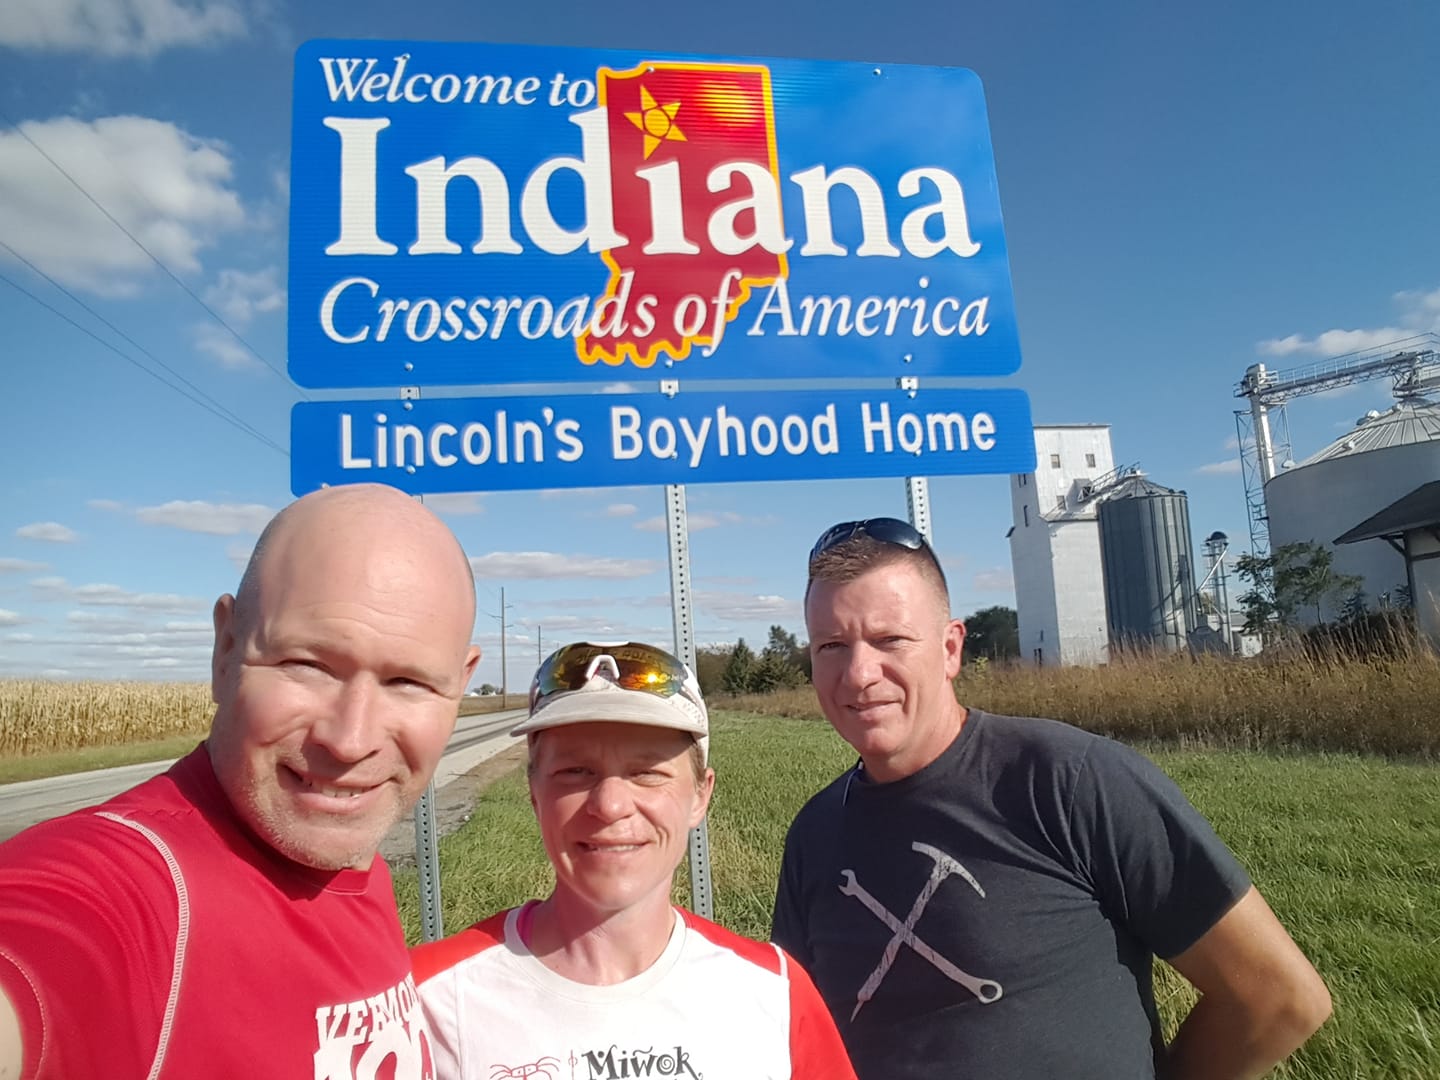 entering Indiana